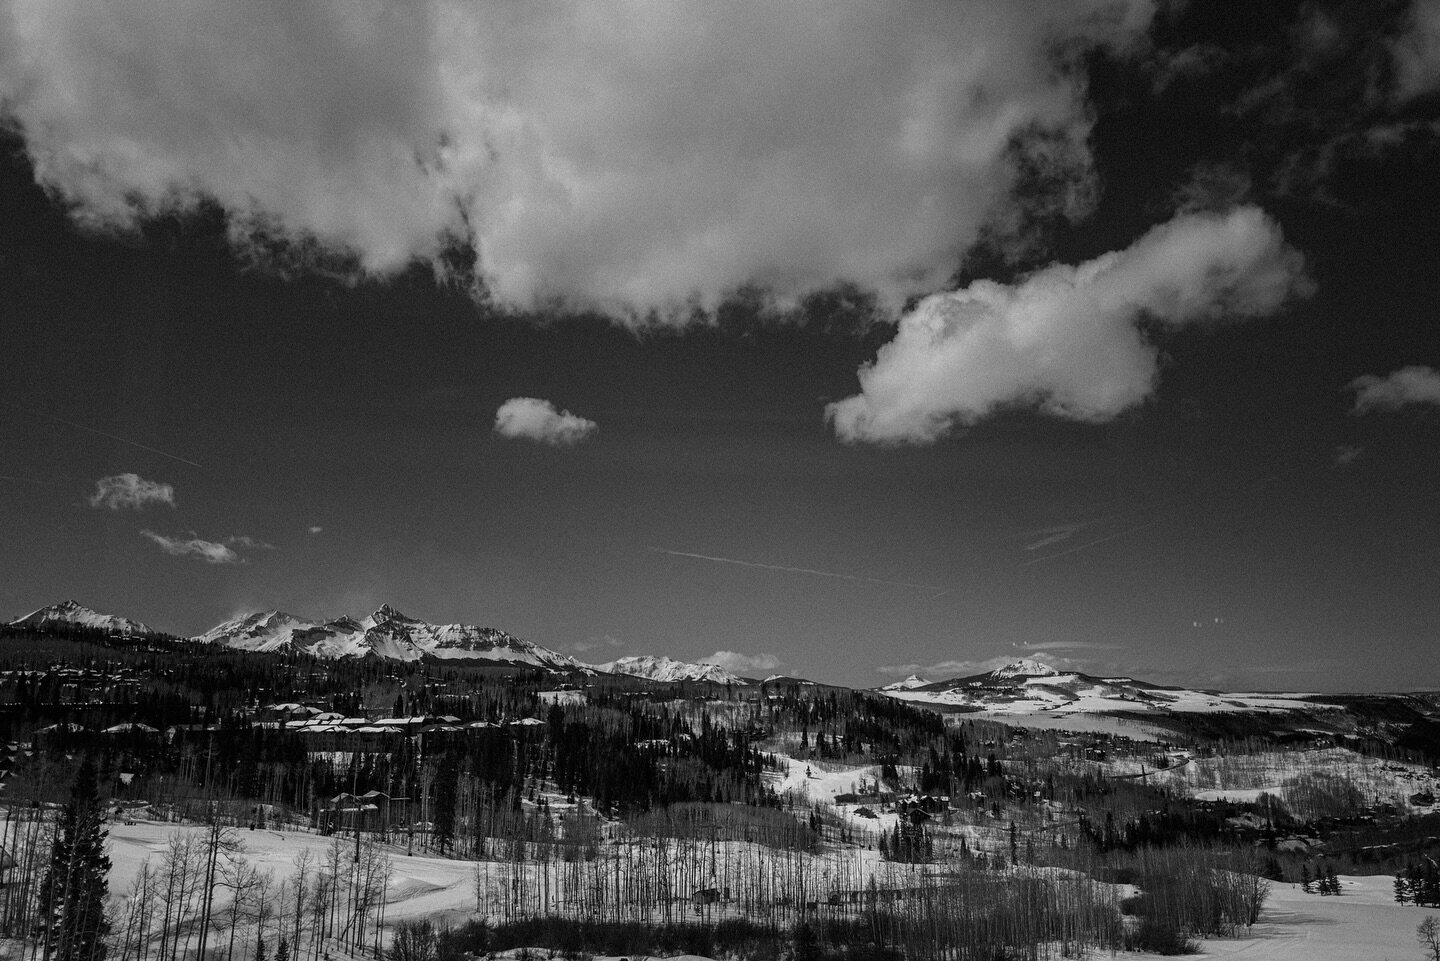 I love all the seasons in Telluride ♡
.
.
#leica #leicaphotography #leicaworld #leicacamera #telluride #tellurideco #ski #bwphotographer #blackandwhitephotography #photographer #photojournalism